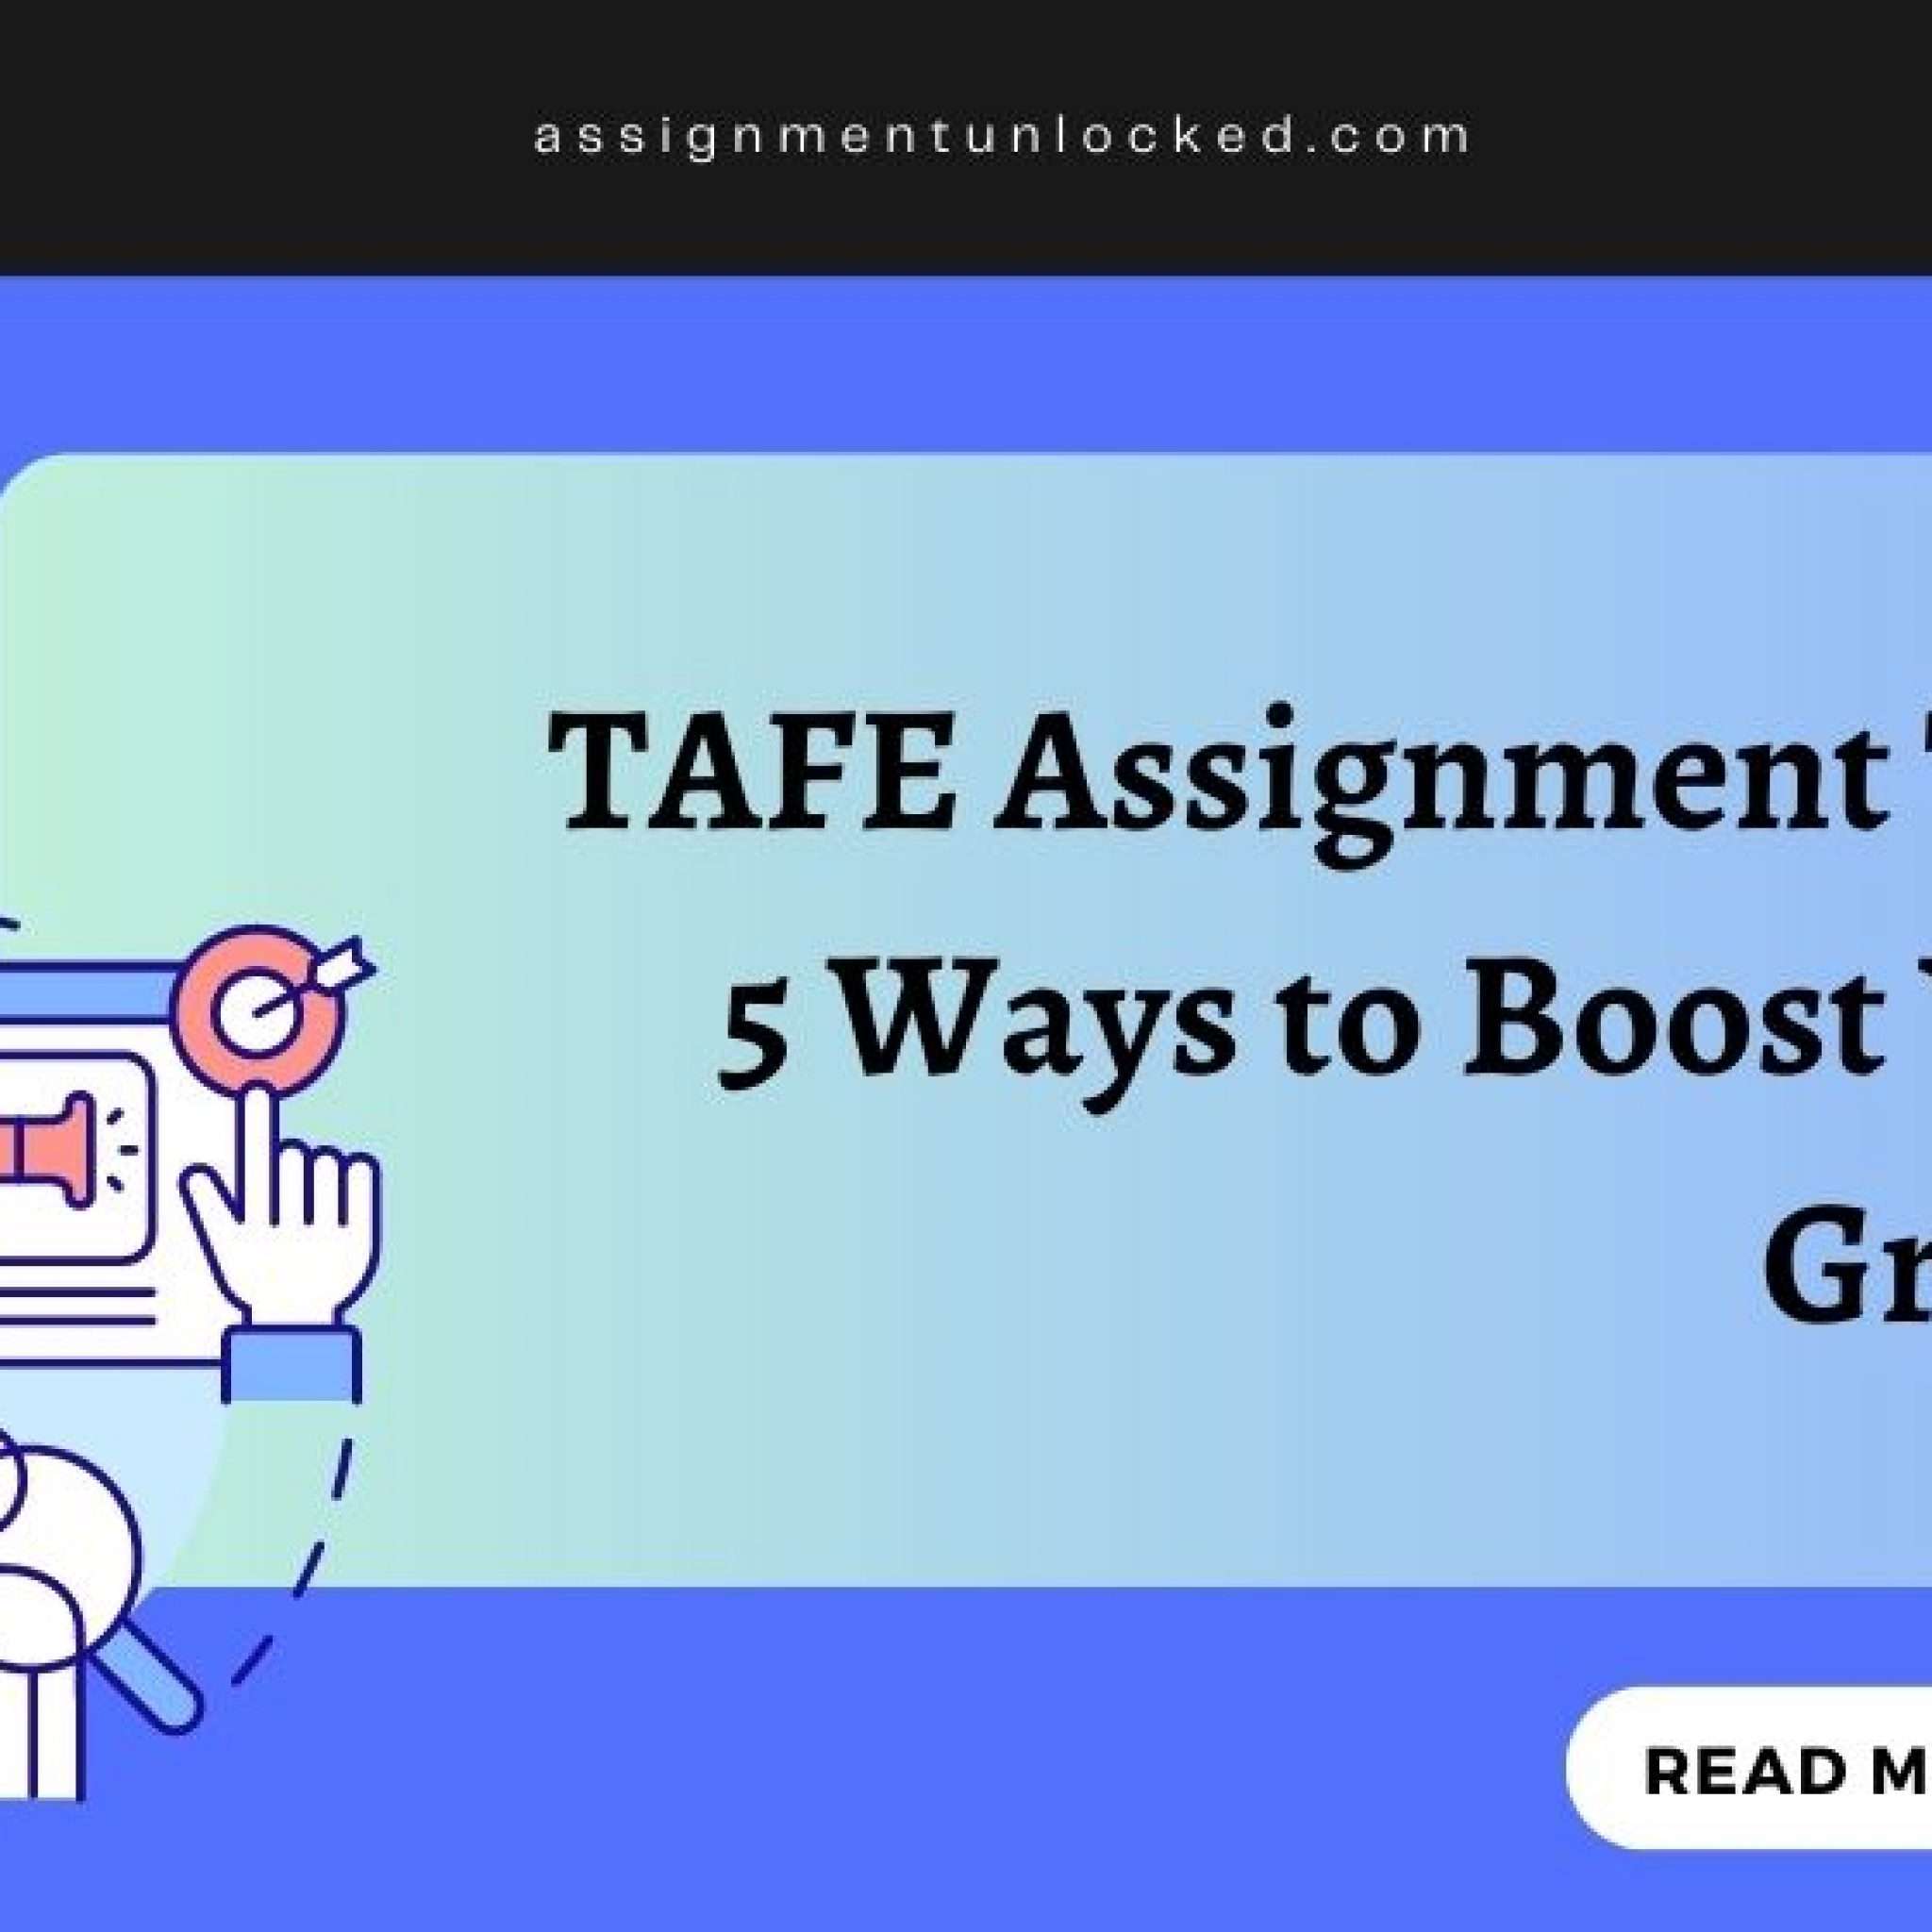 Tafe assignment tips